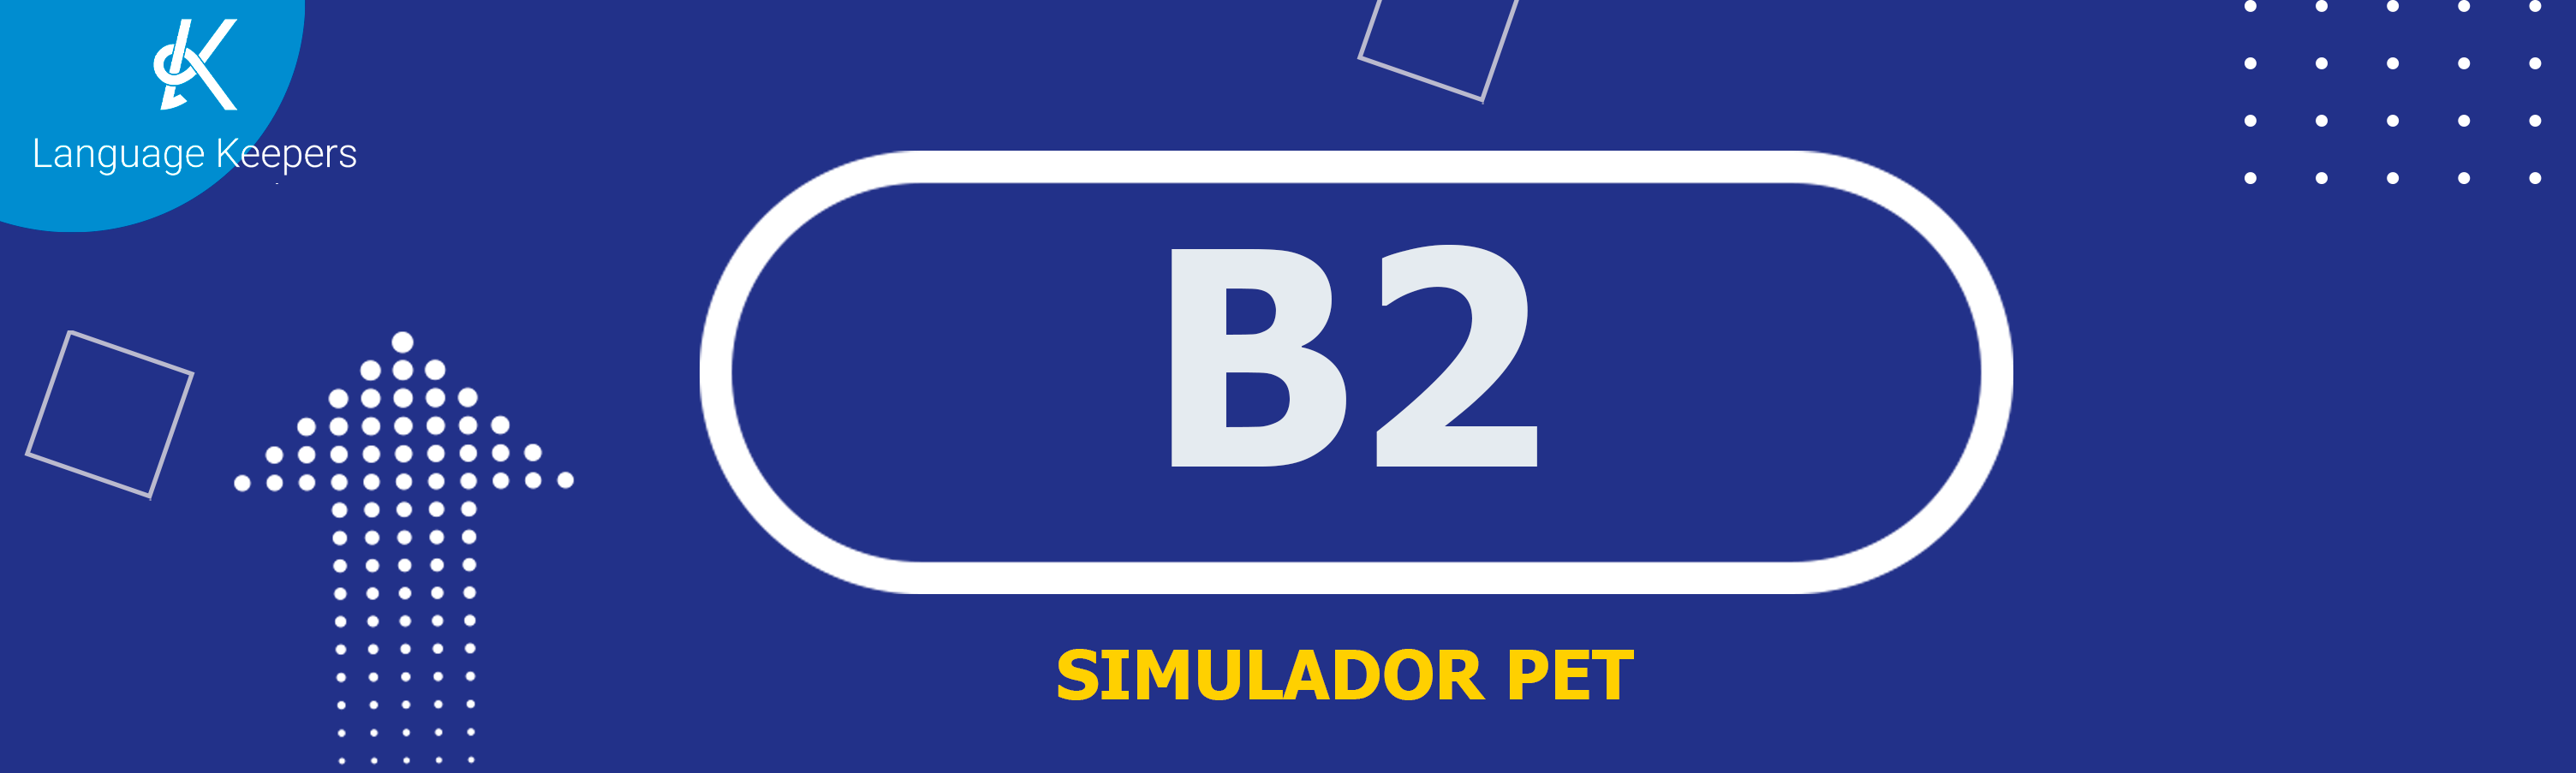 SIMULADOR PET B2